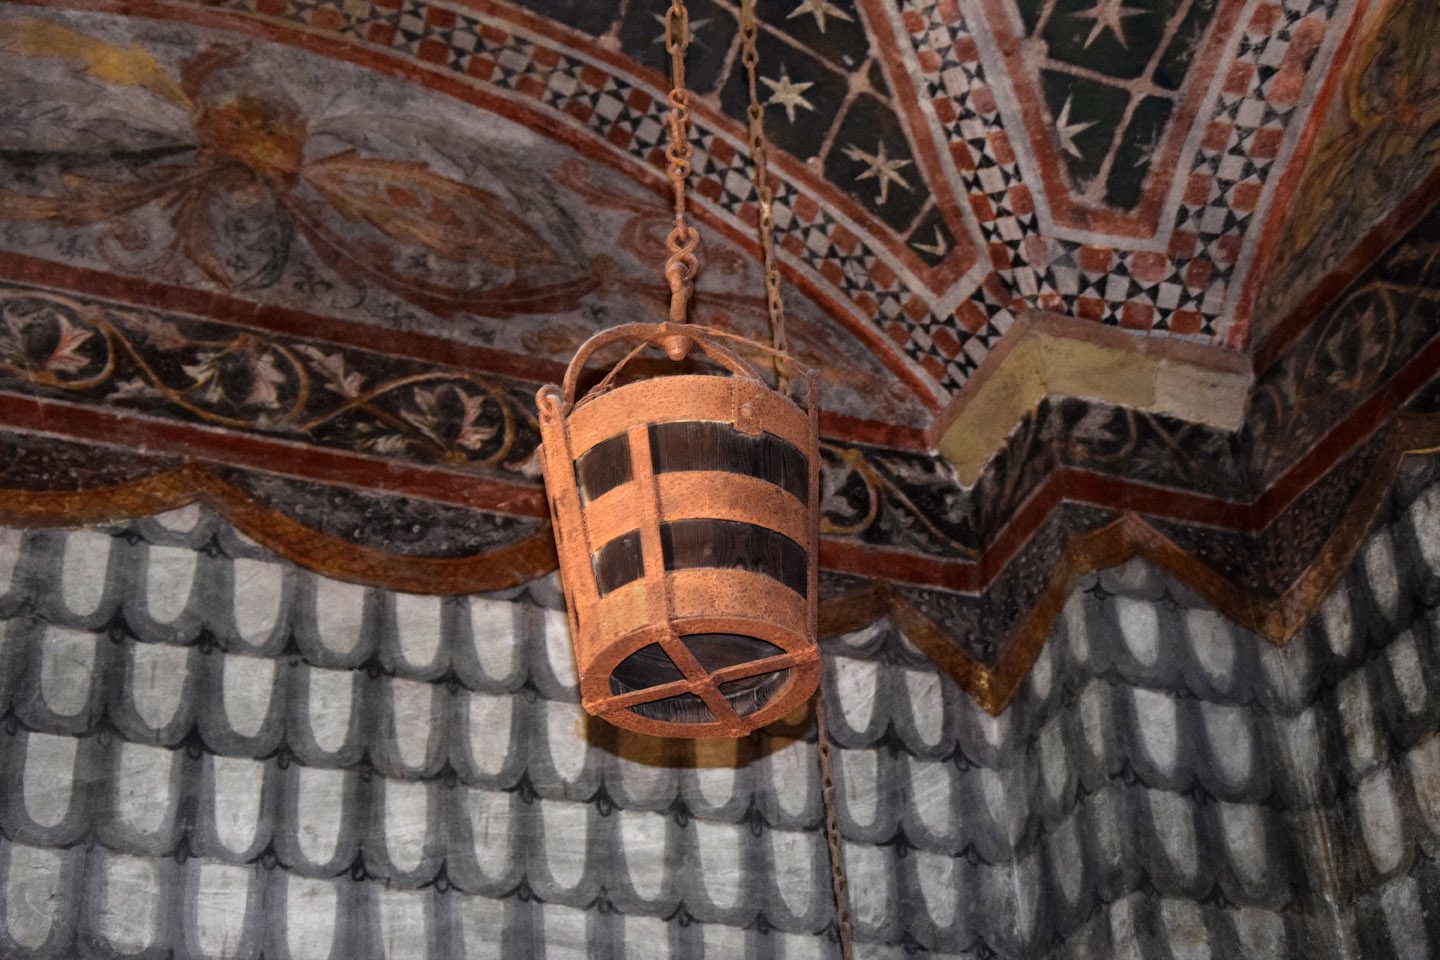 A replica of the stolen bucket, inside the Ghirlandina Tower. (Credit: Wikimedia)